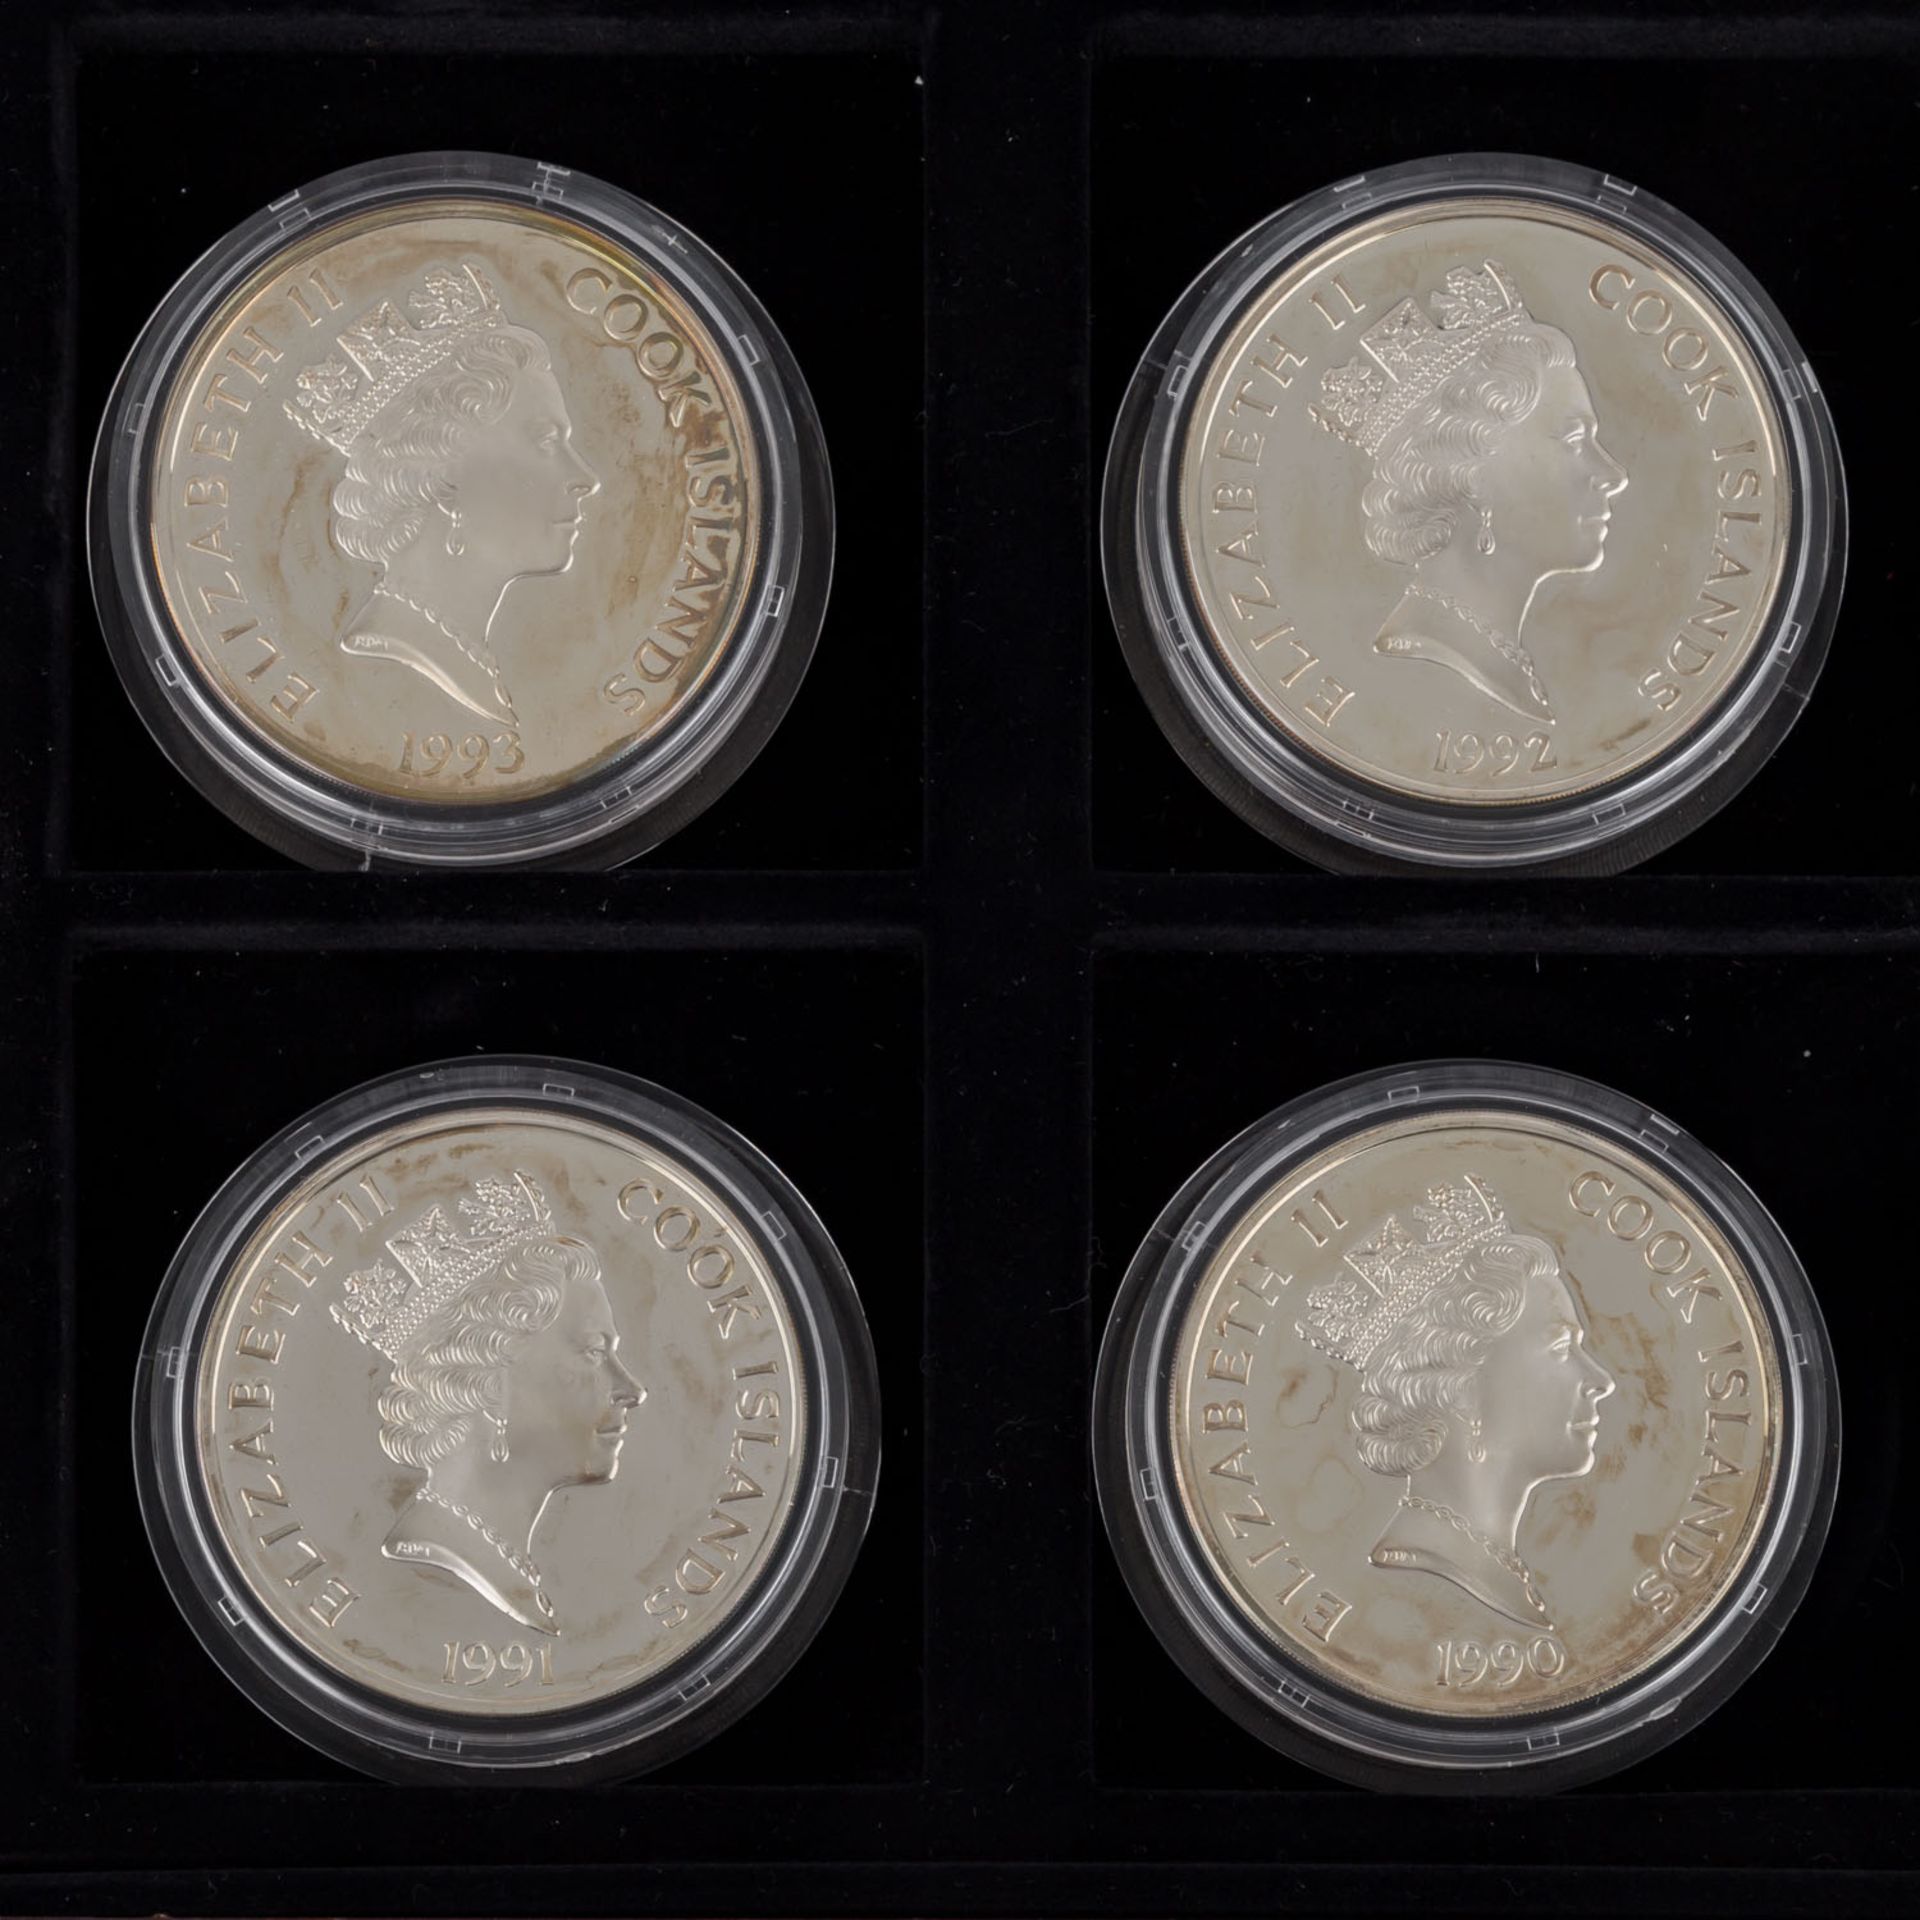 Cookinseln Serie 500 Years of America - 4 x 100 Dollars 1990-1993,je 5 Unzen fein, PP, verkapselt. - Bild 2 aus 3